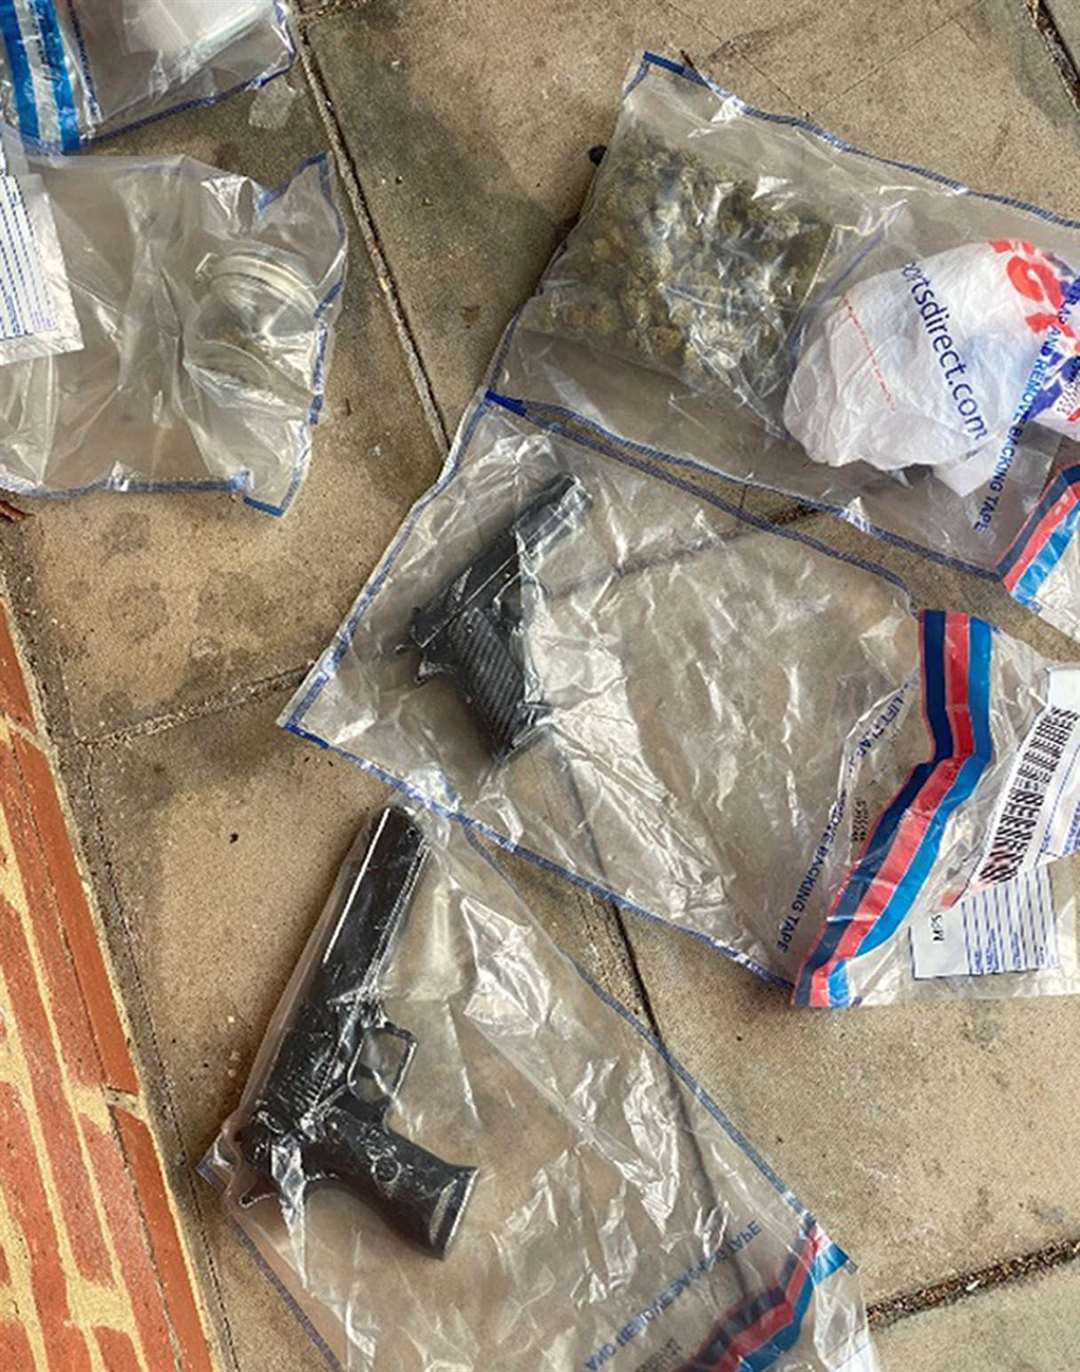 Drugs and guns discovered during Operation Pandilla (Metropolitan Police/PA)